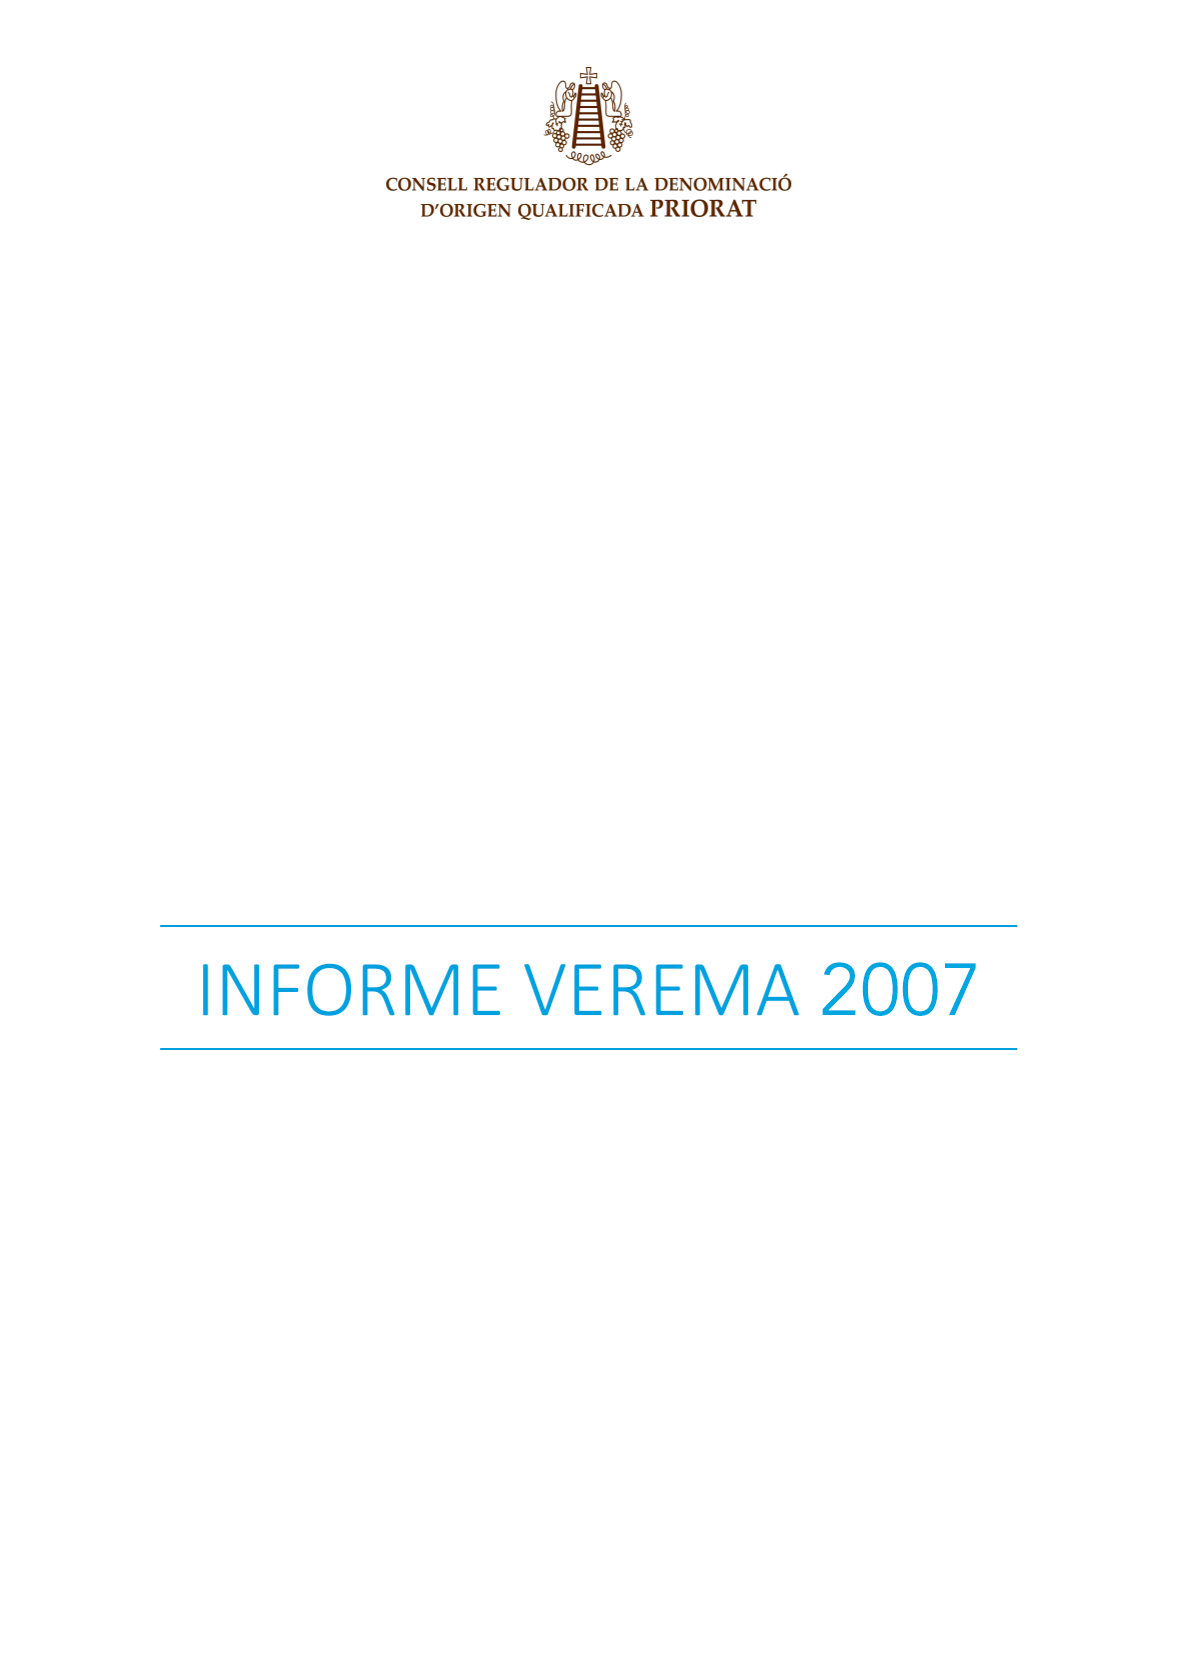 Informe de verema 2007